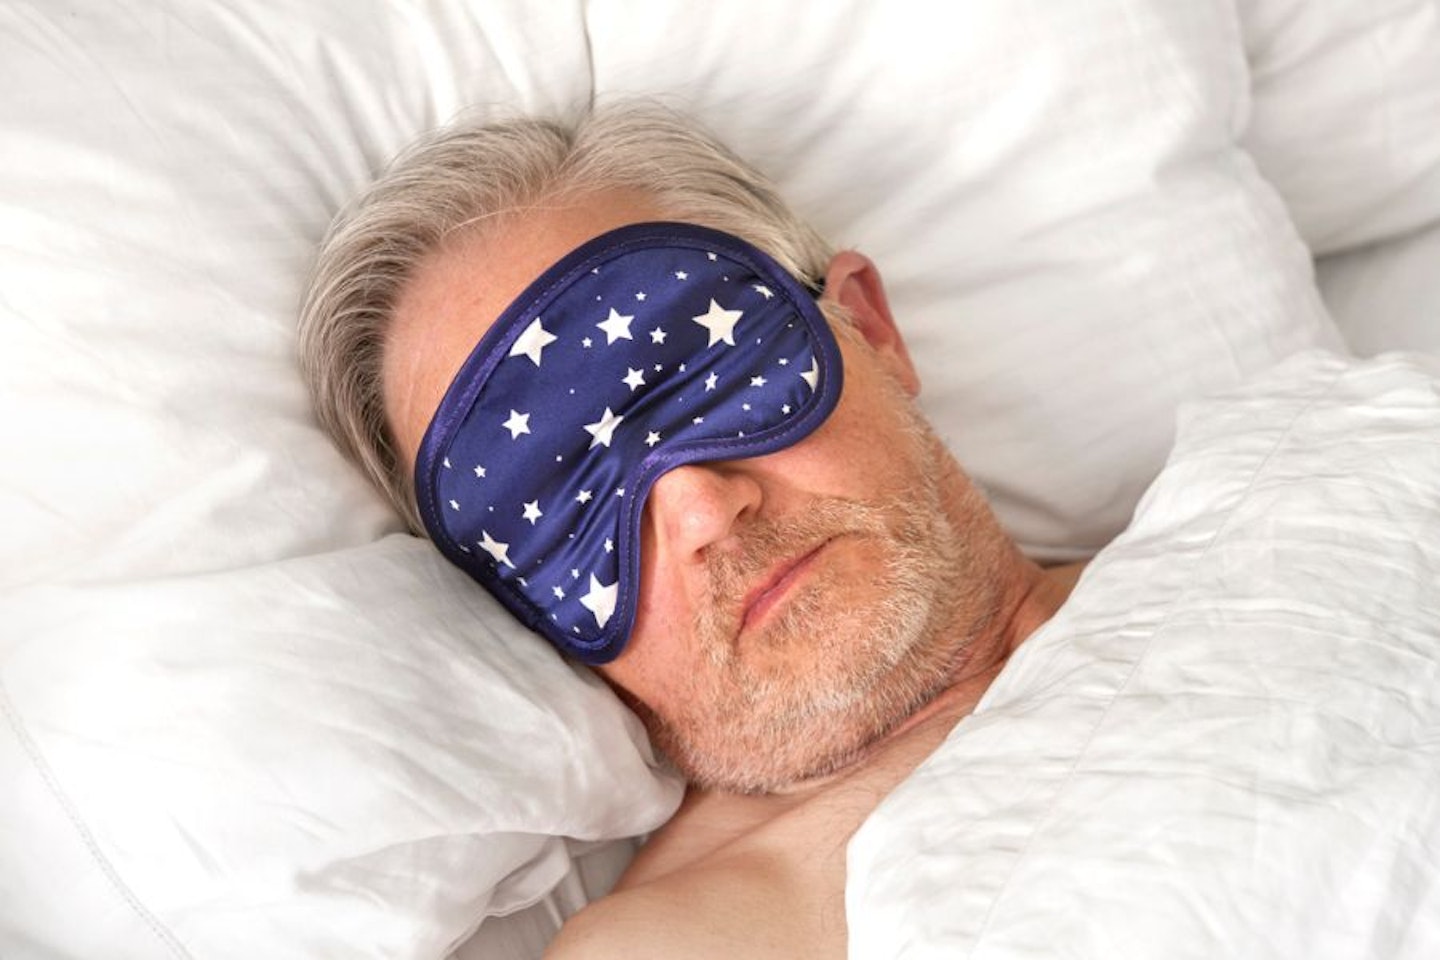 Man wearing eye mask in bed - close up